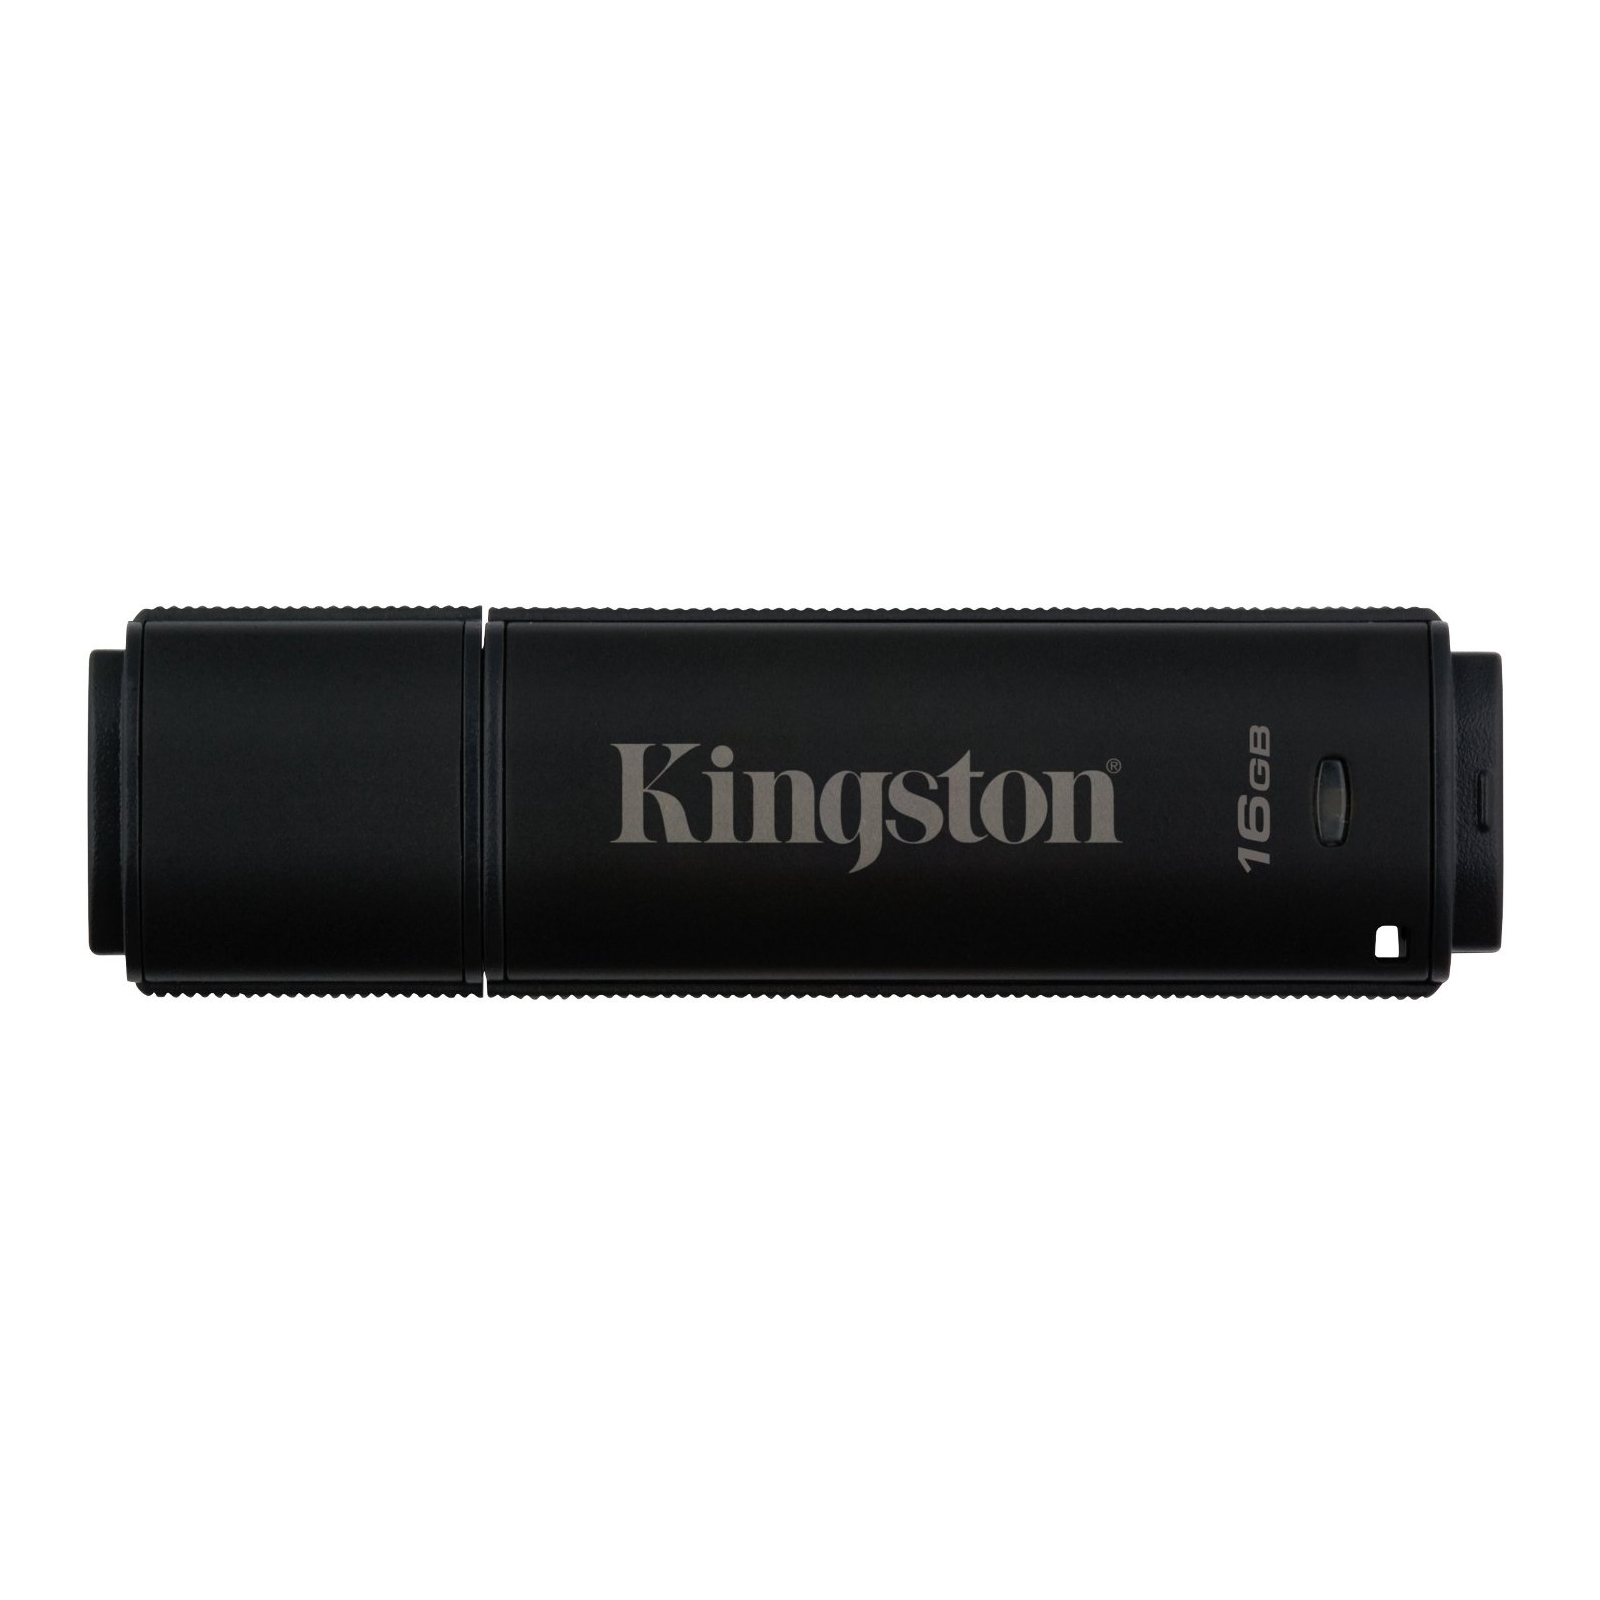 USB флеш накопитель Kingston 16GB DataTraveler 4000 G2 Metal Black USB 3.0 (DT4000G2/16GB)